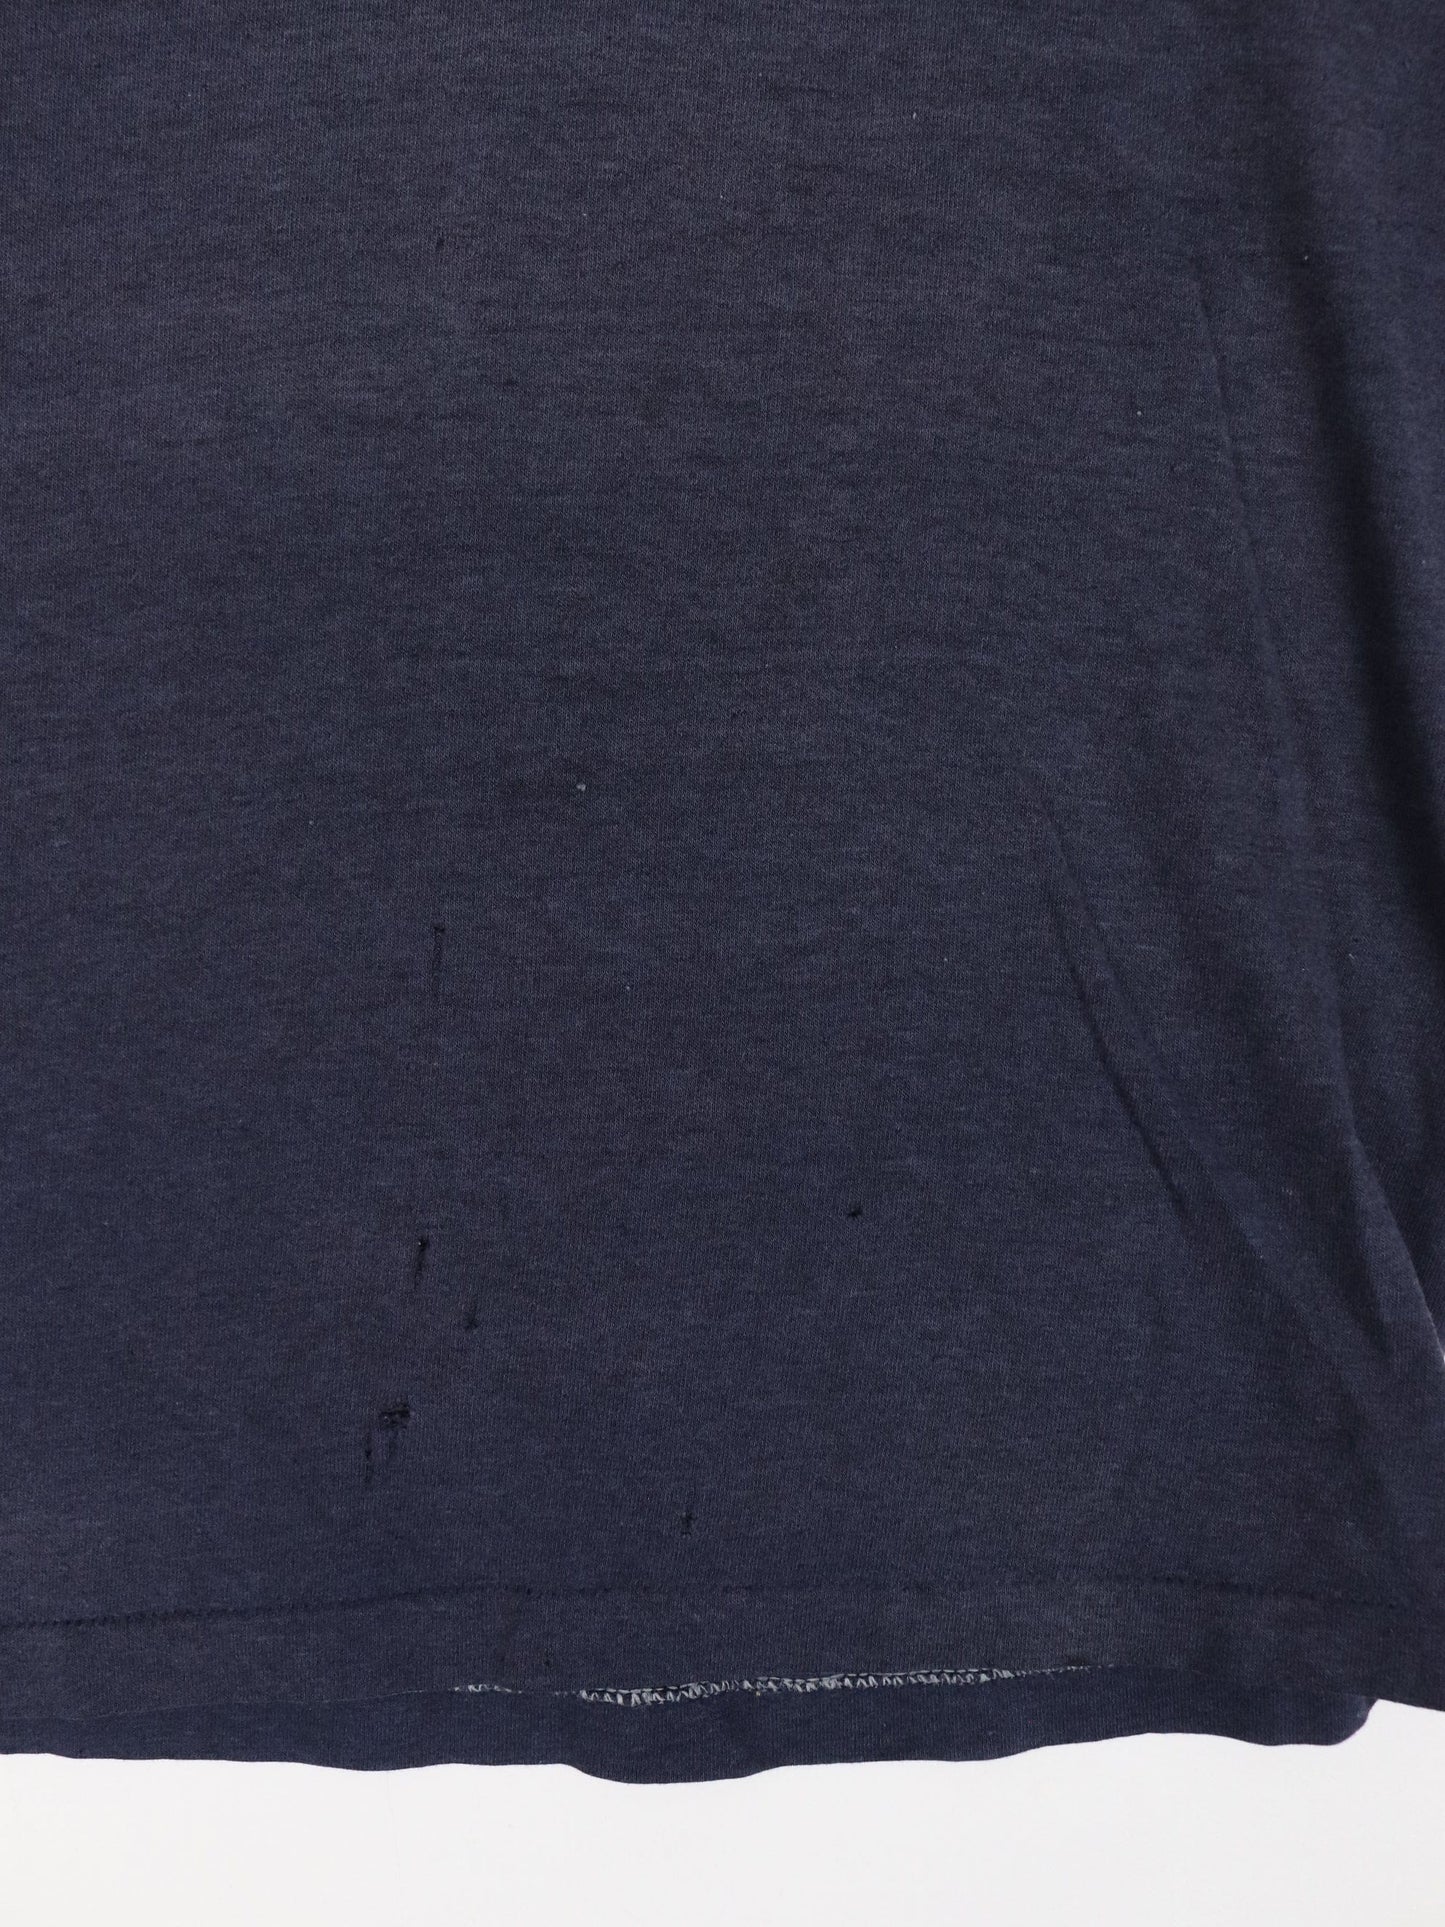 Other T-Shirts & Tank Tops Vintage Panama City Beach T Shirt Mens Small Blue 80s USA